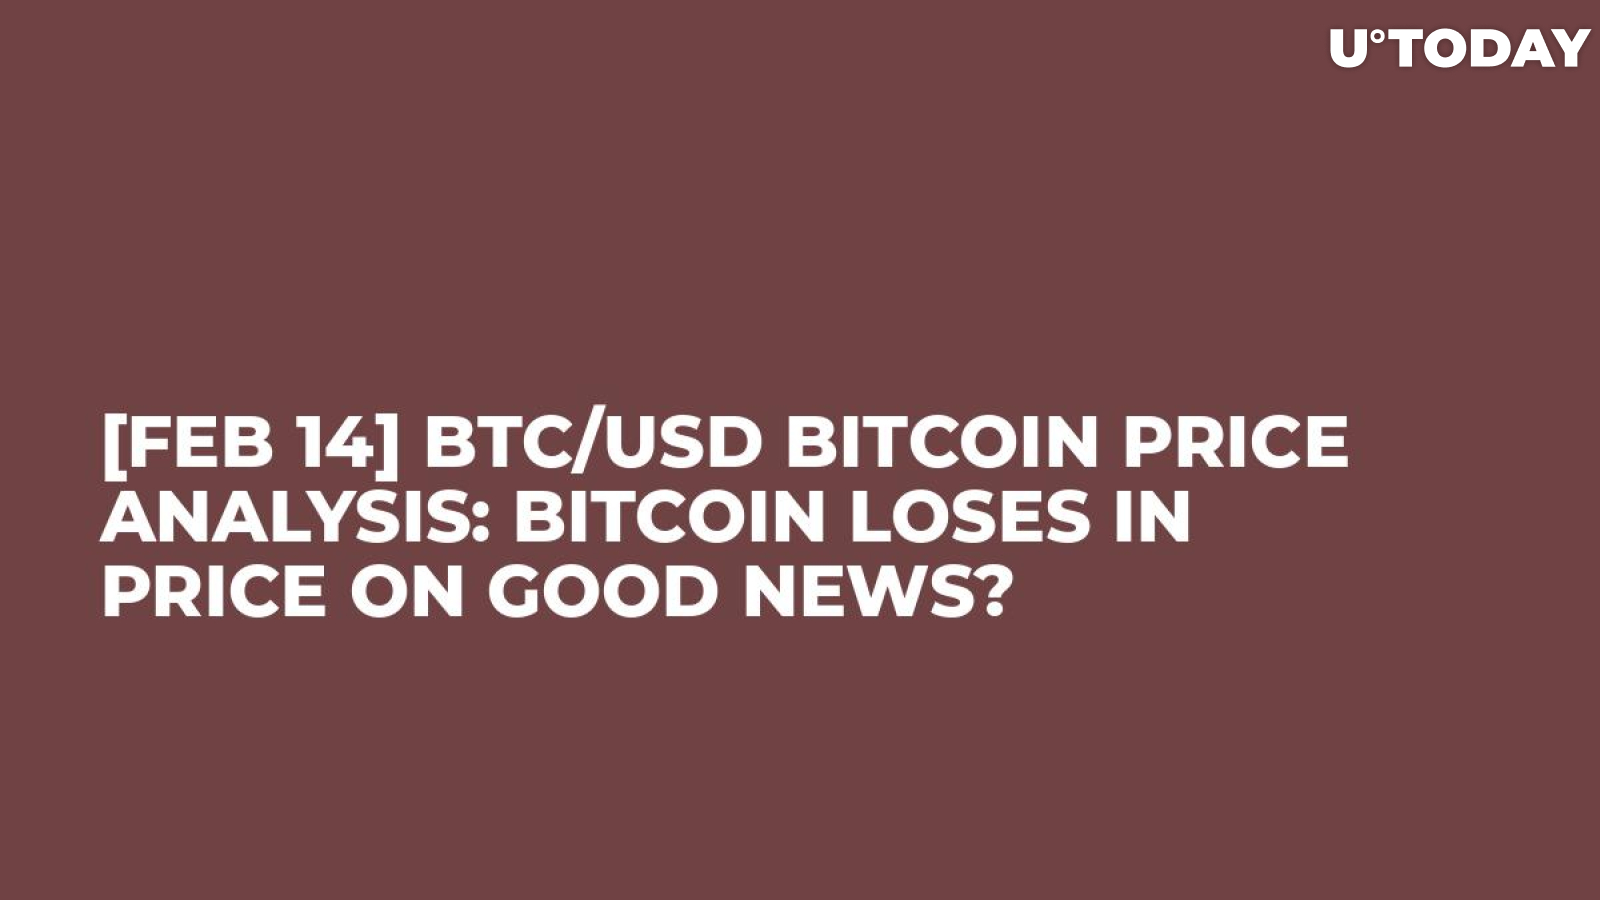 [FEB 14] BTC/USD Bitcoin Price Analysis: Bitcoin Loses in Price on Good News?